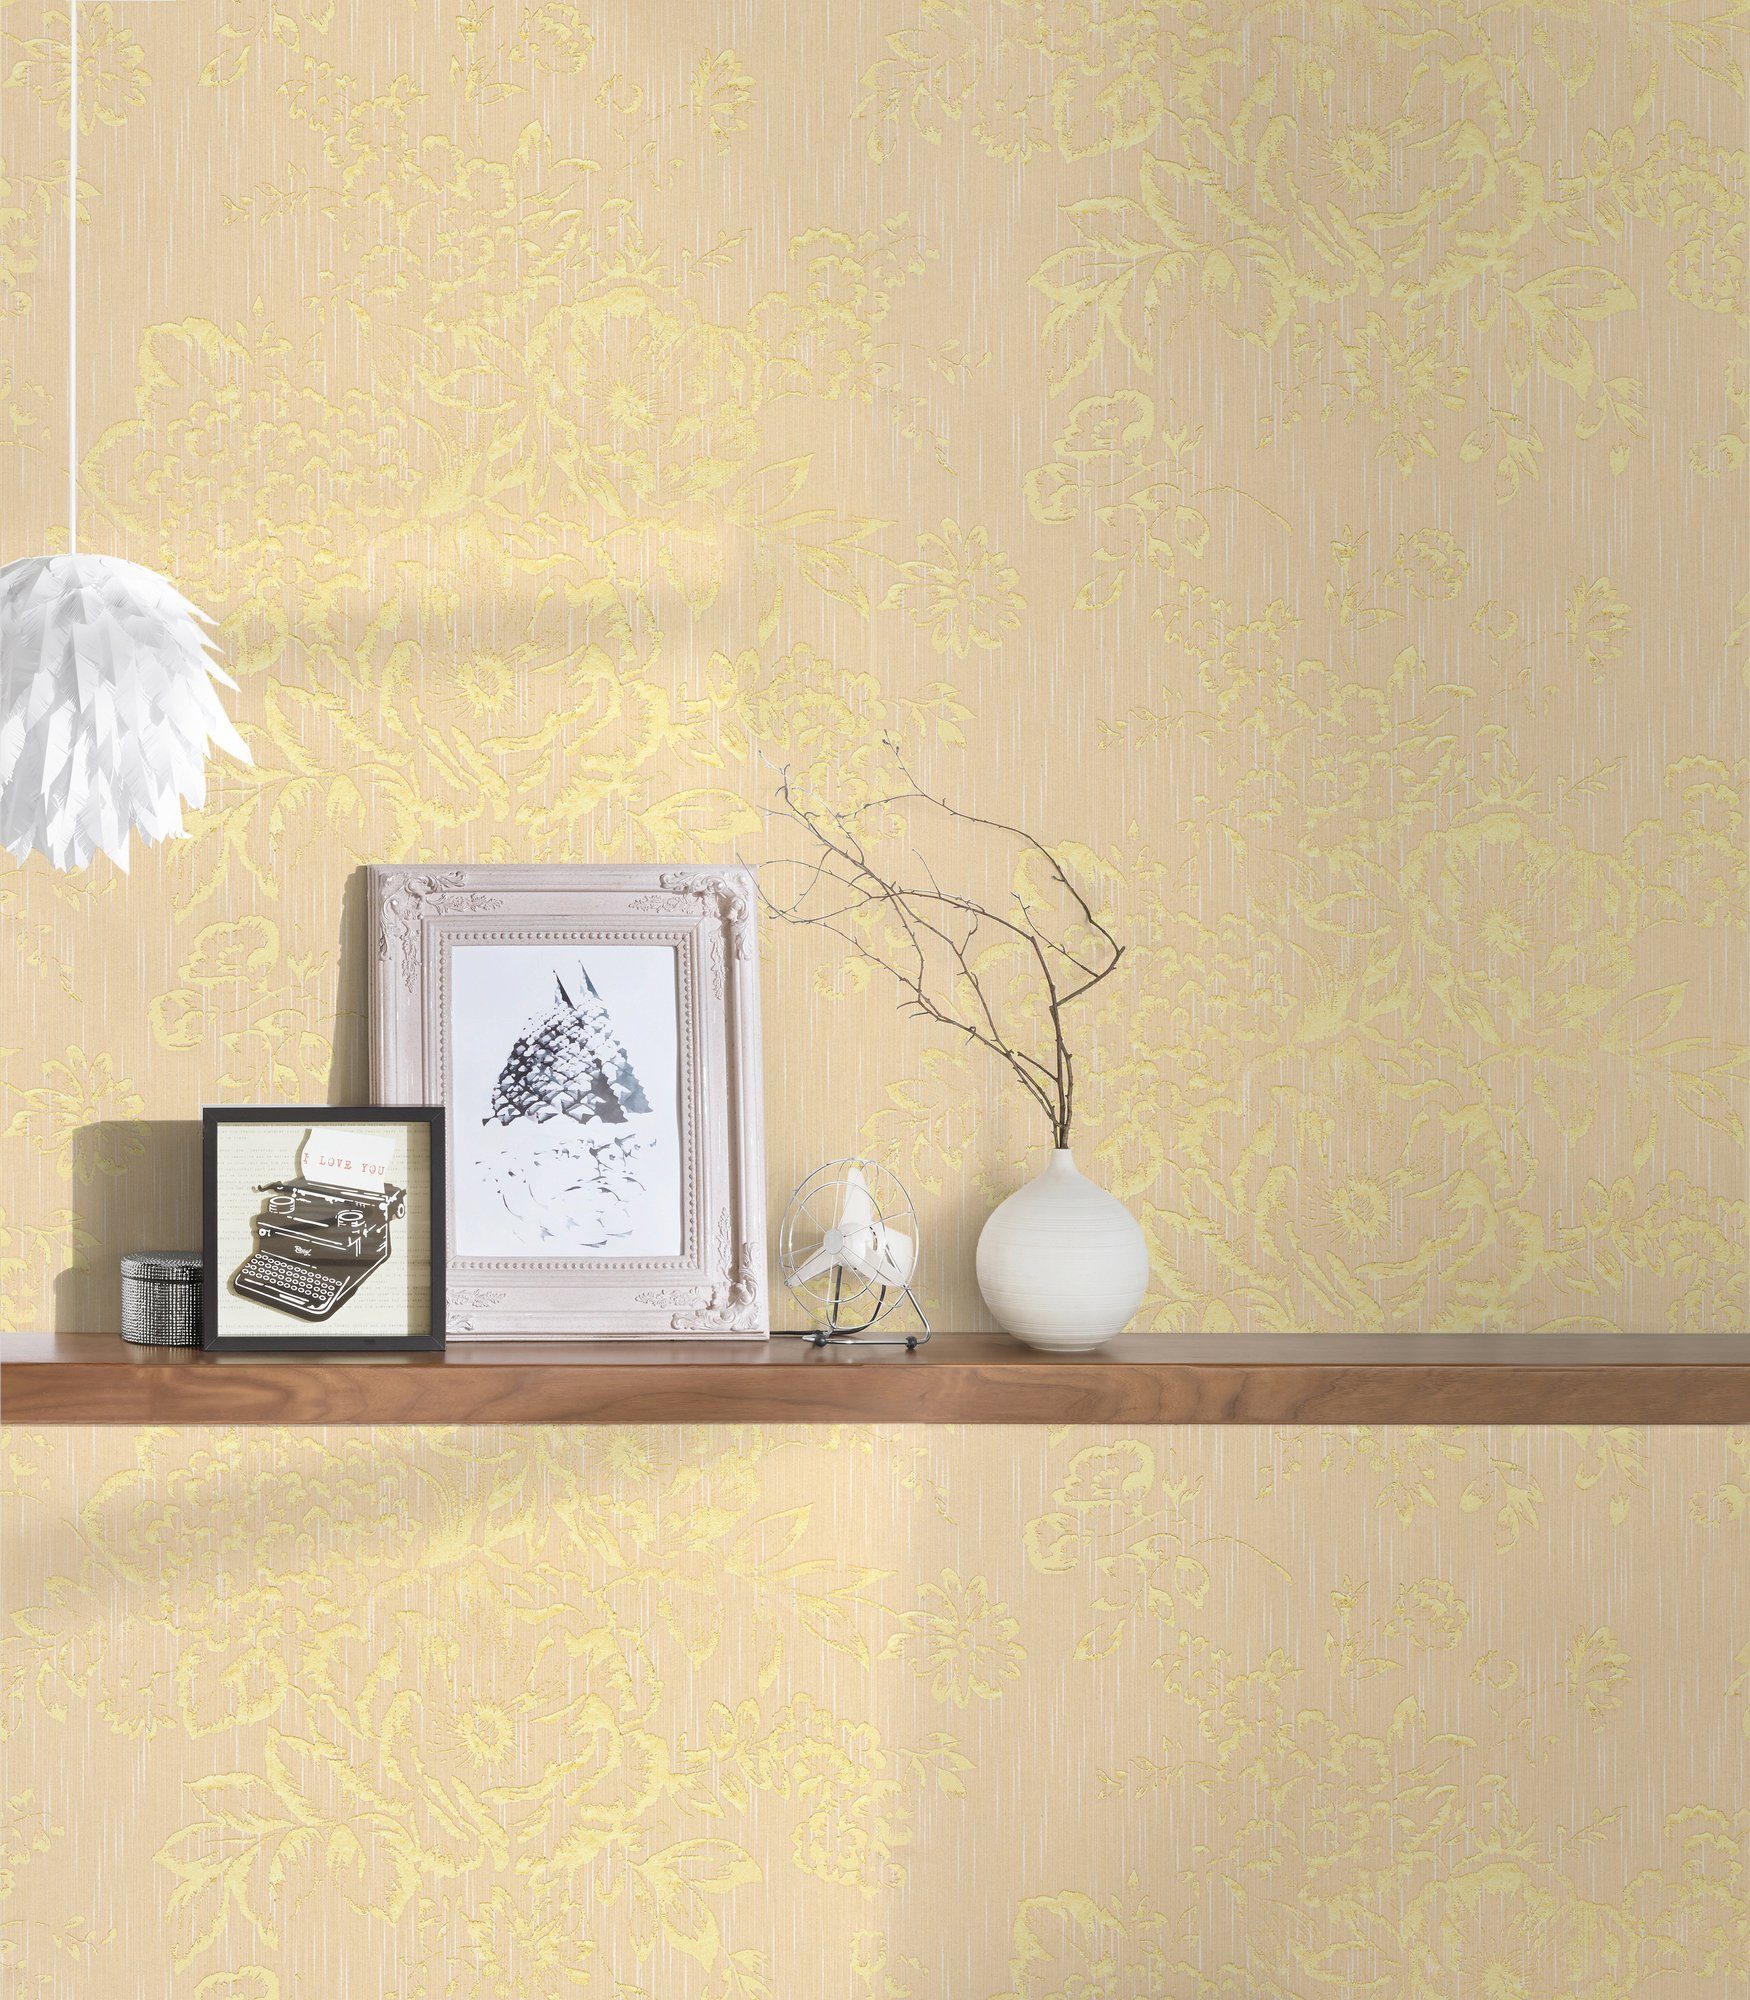 A.S. Création Architects Blumen Textiltapete gold/creme matt, Metallic glänzend, Tapete Silk, floral, Paper Barocktapete samtig